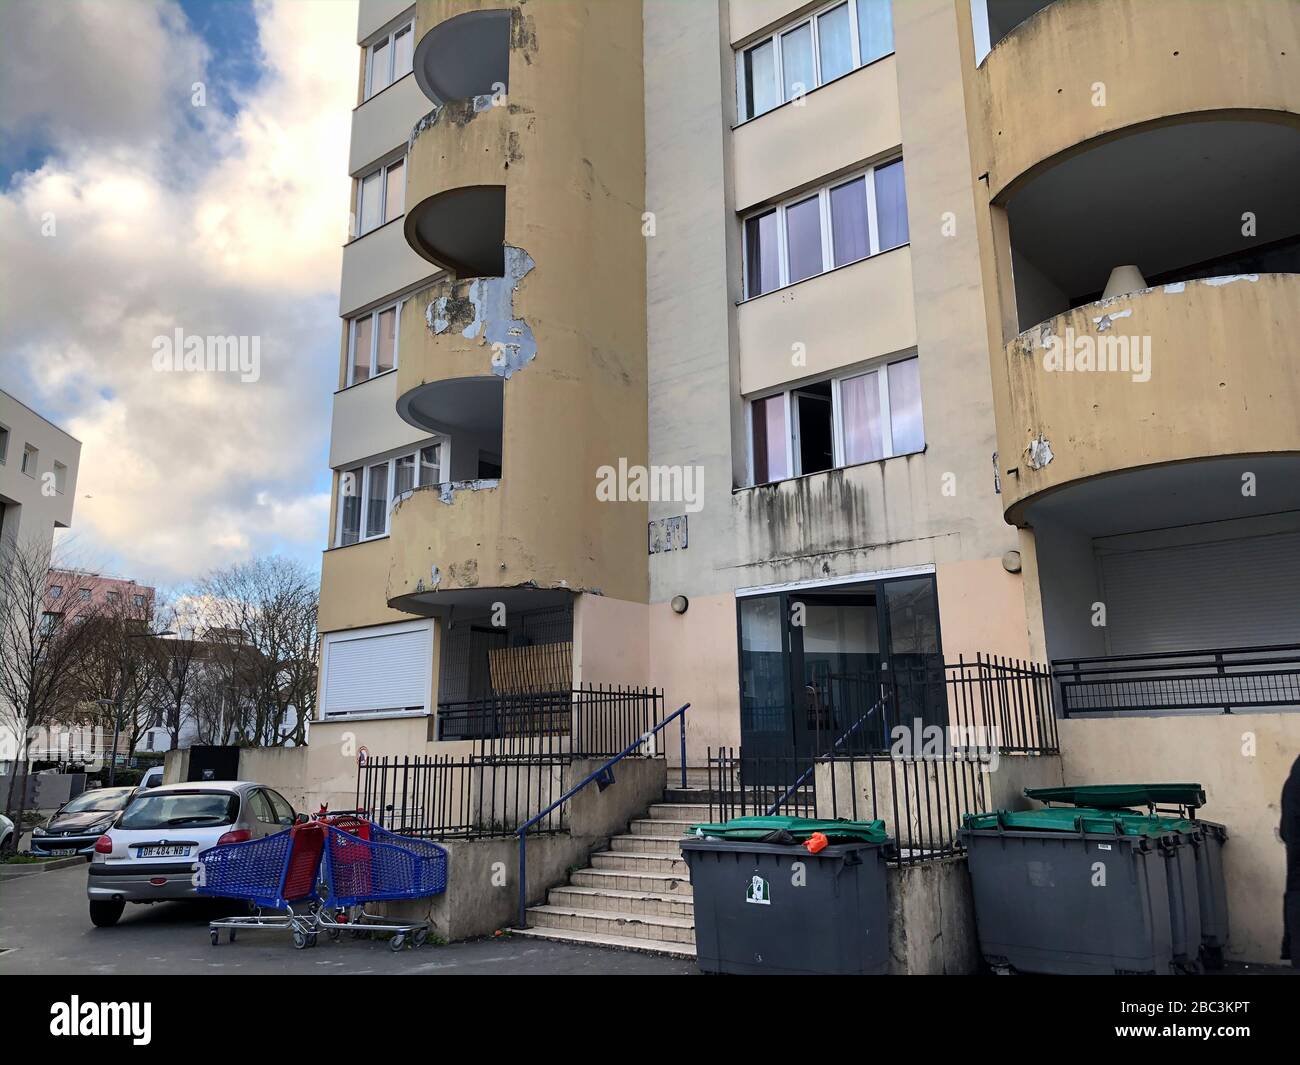 sevran-france-paris-suburbs-estate-apartment-building-public-social-housing-projects-hlm-2BC3KPT.jpg